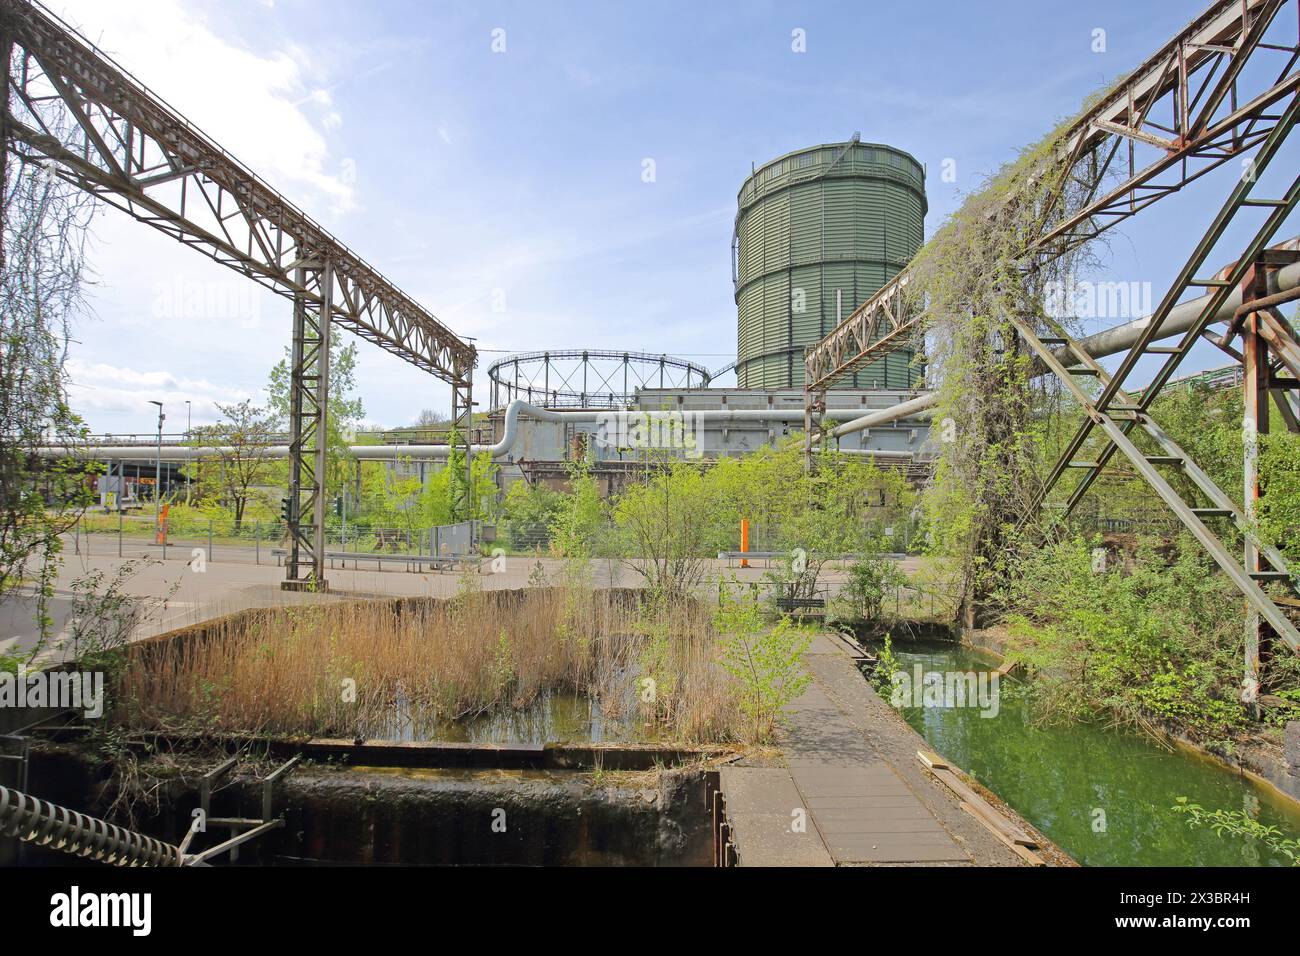 Gazomètre, bassin hydrographique et renaturalisation, UNESCO Voelklingen Ironworks, Voelklingen, Sarre, Allemagne Banque D'Images